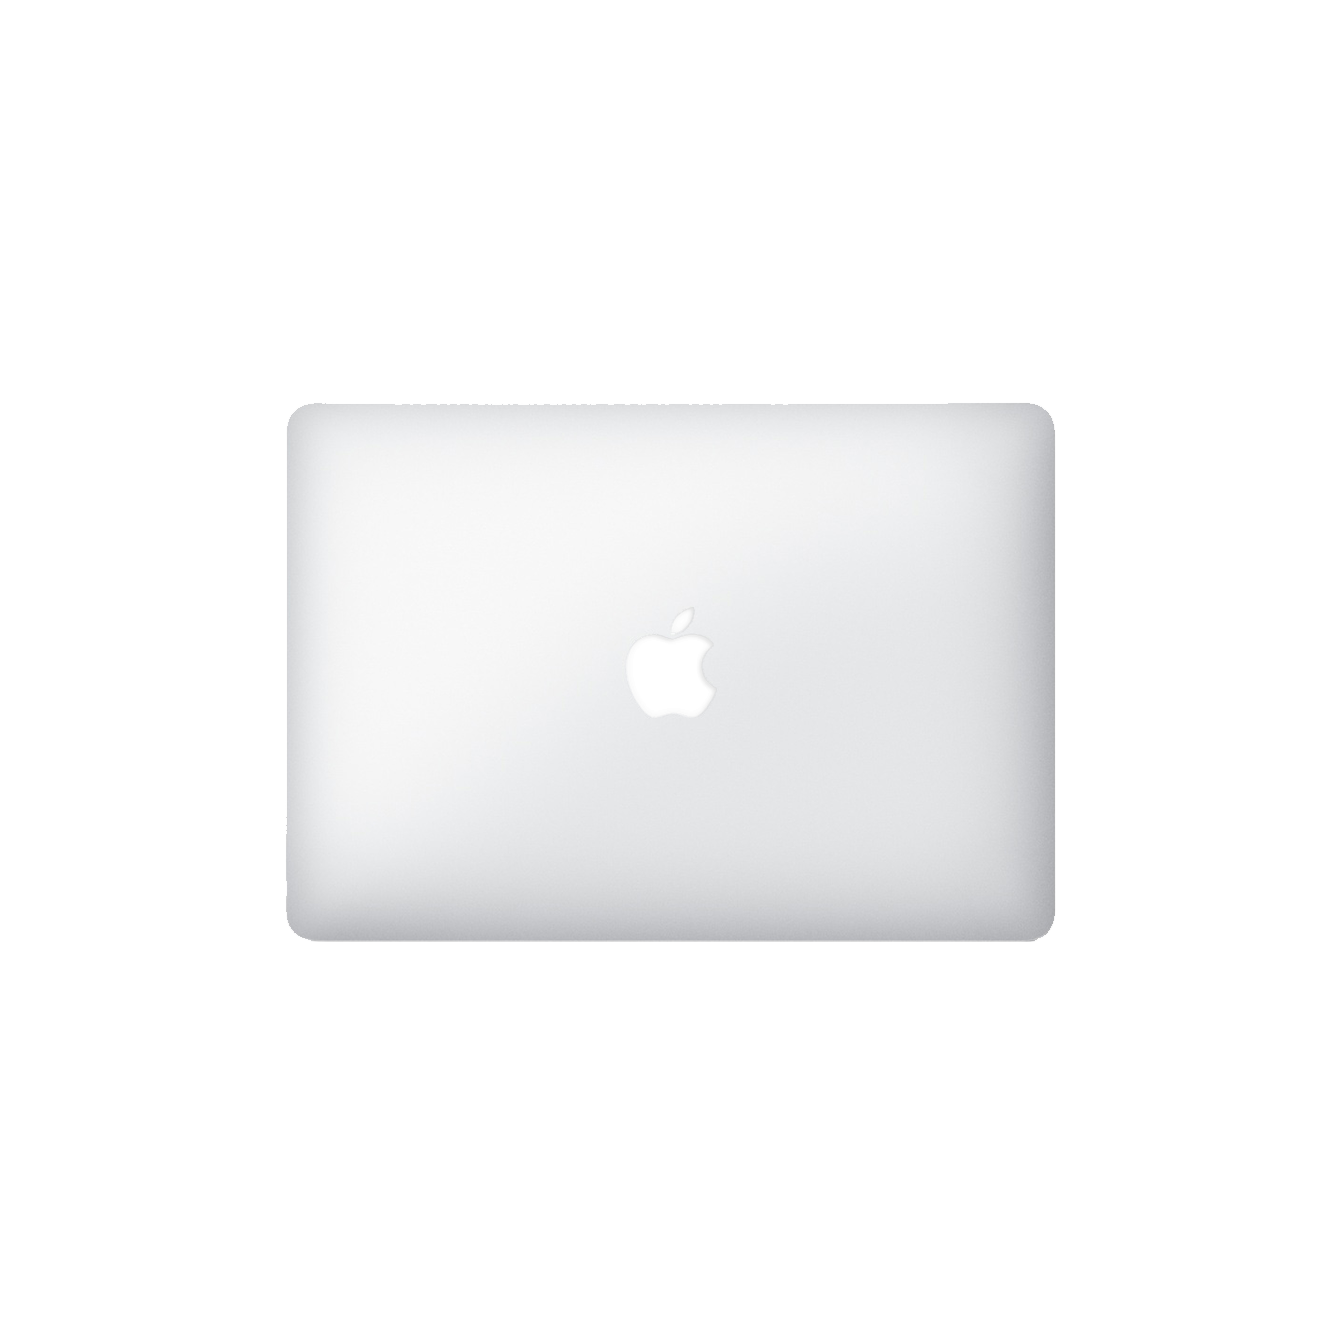 Refurbished MacBook Air 13" Dual Core i5 1.3 8GB RAM 128GB SSD